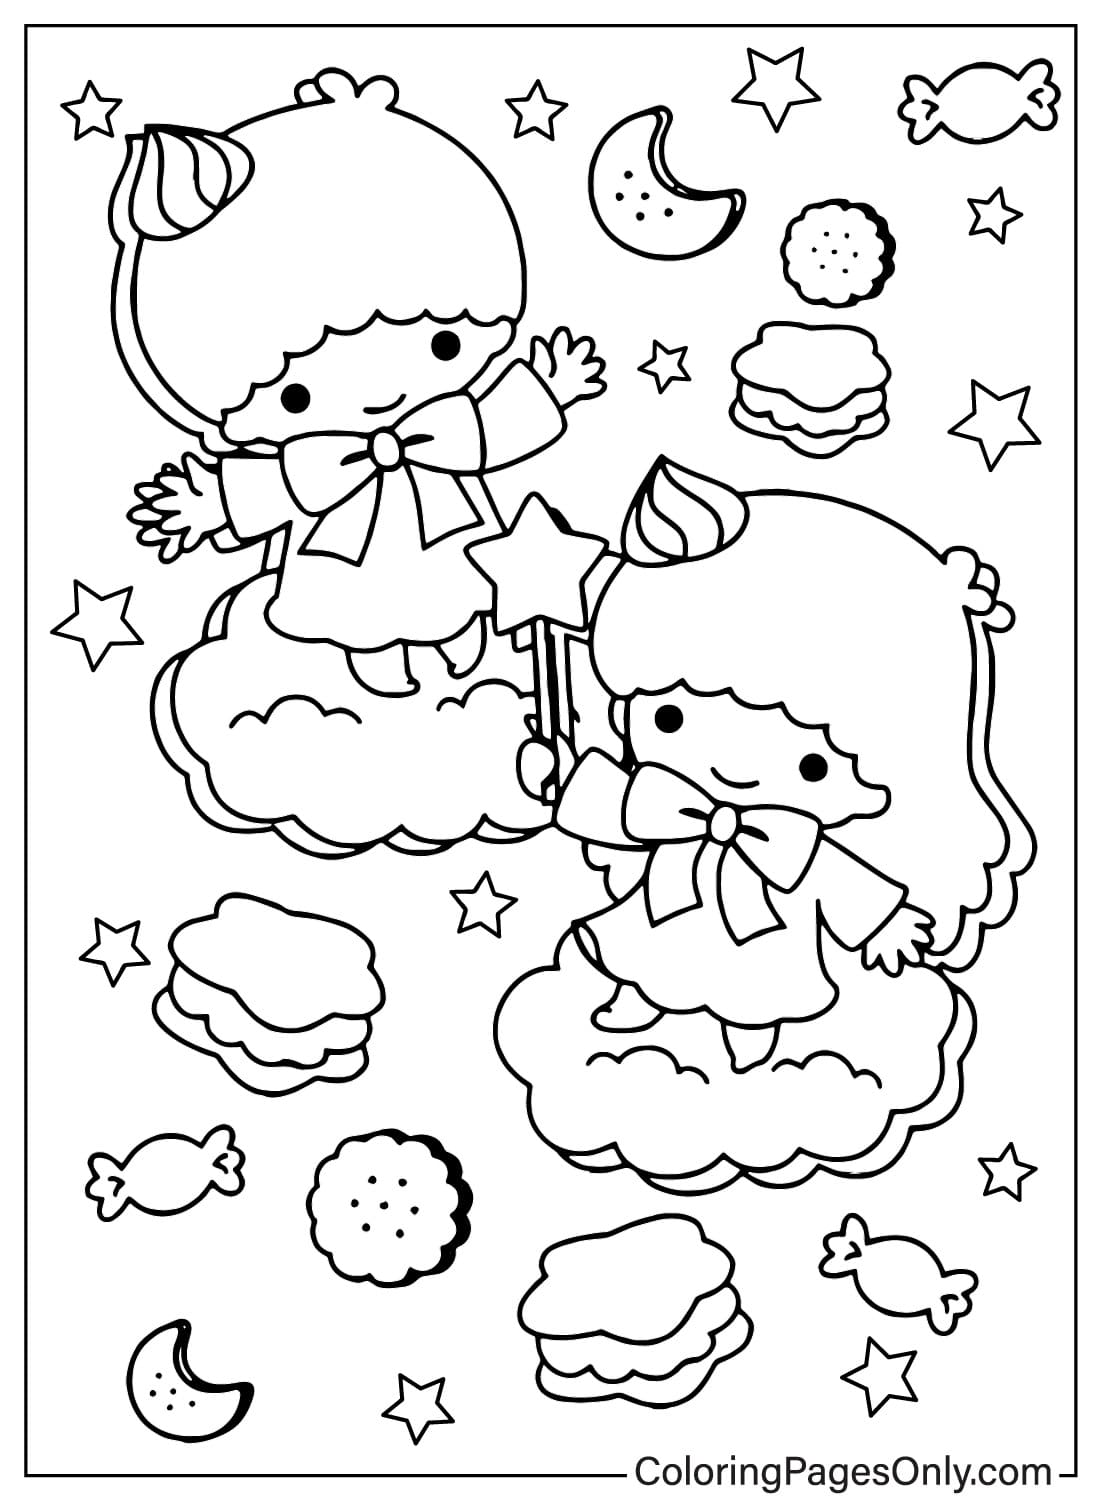 Lala en Kiki kleurplaat van Little Twin Stars